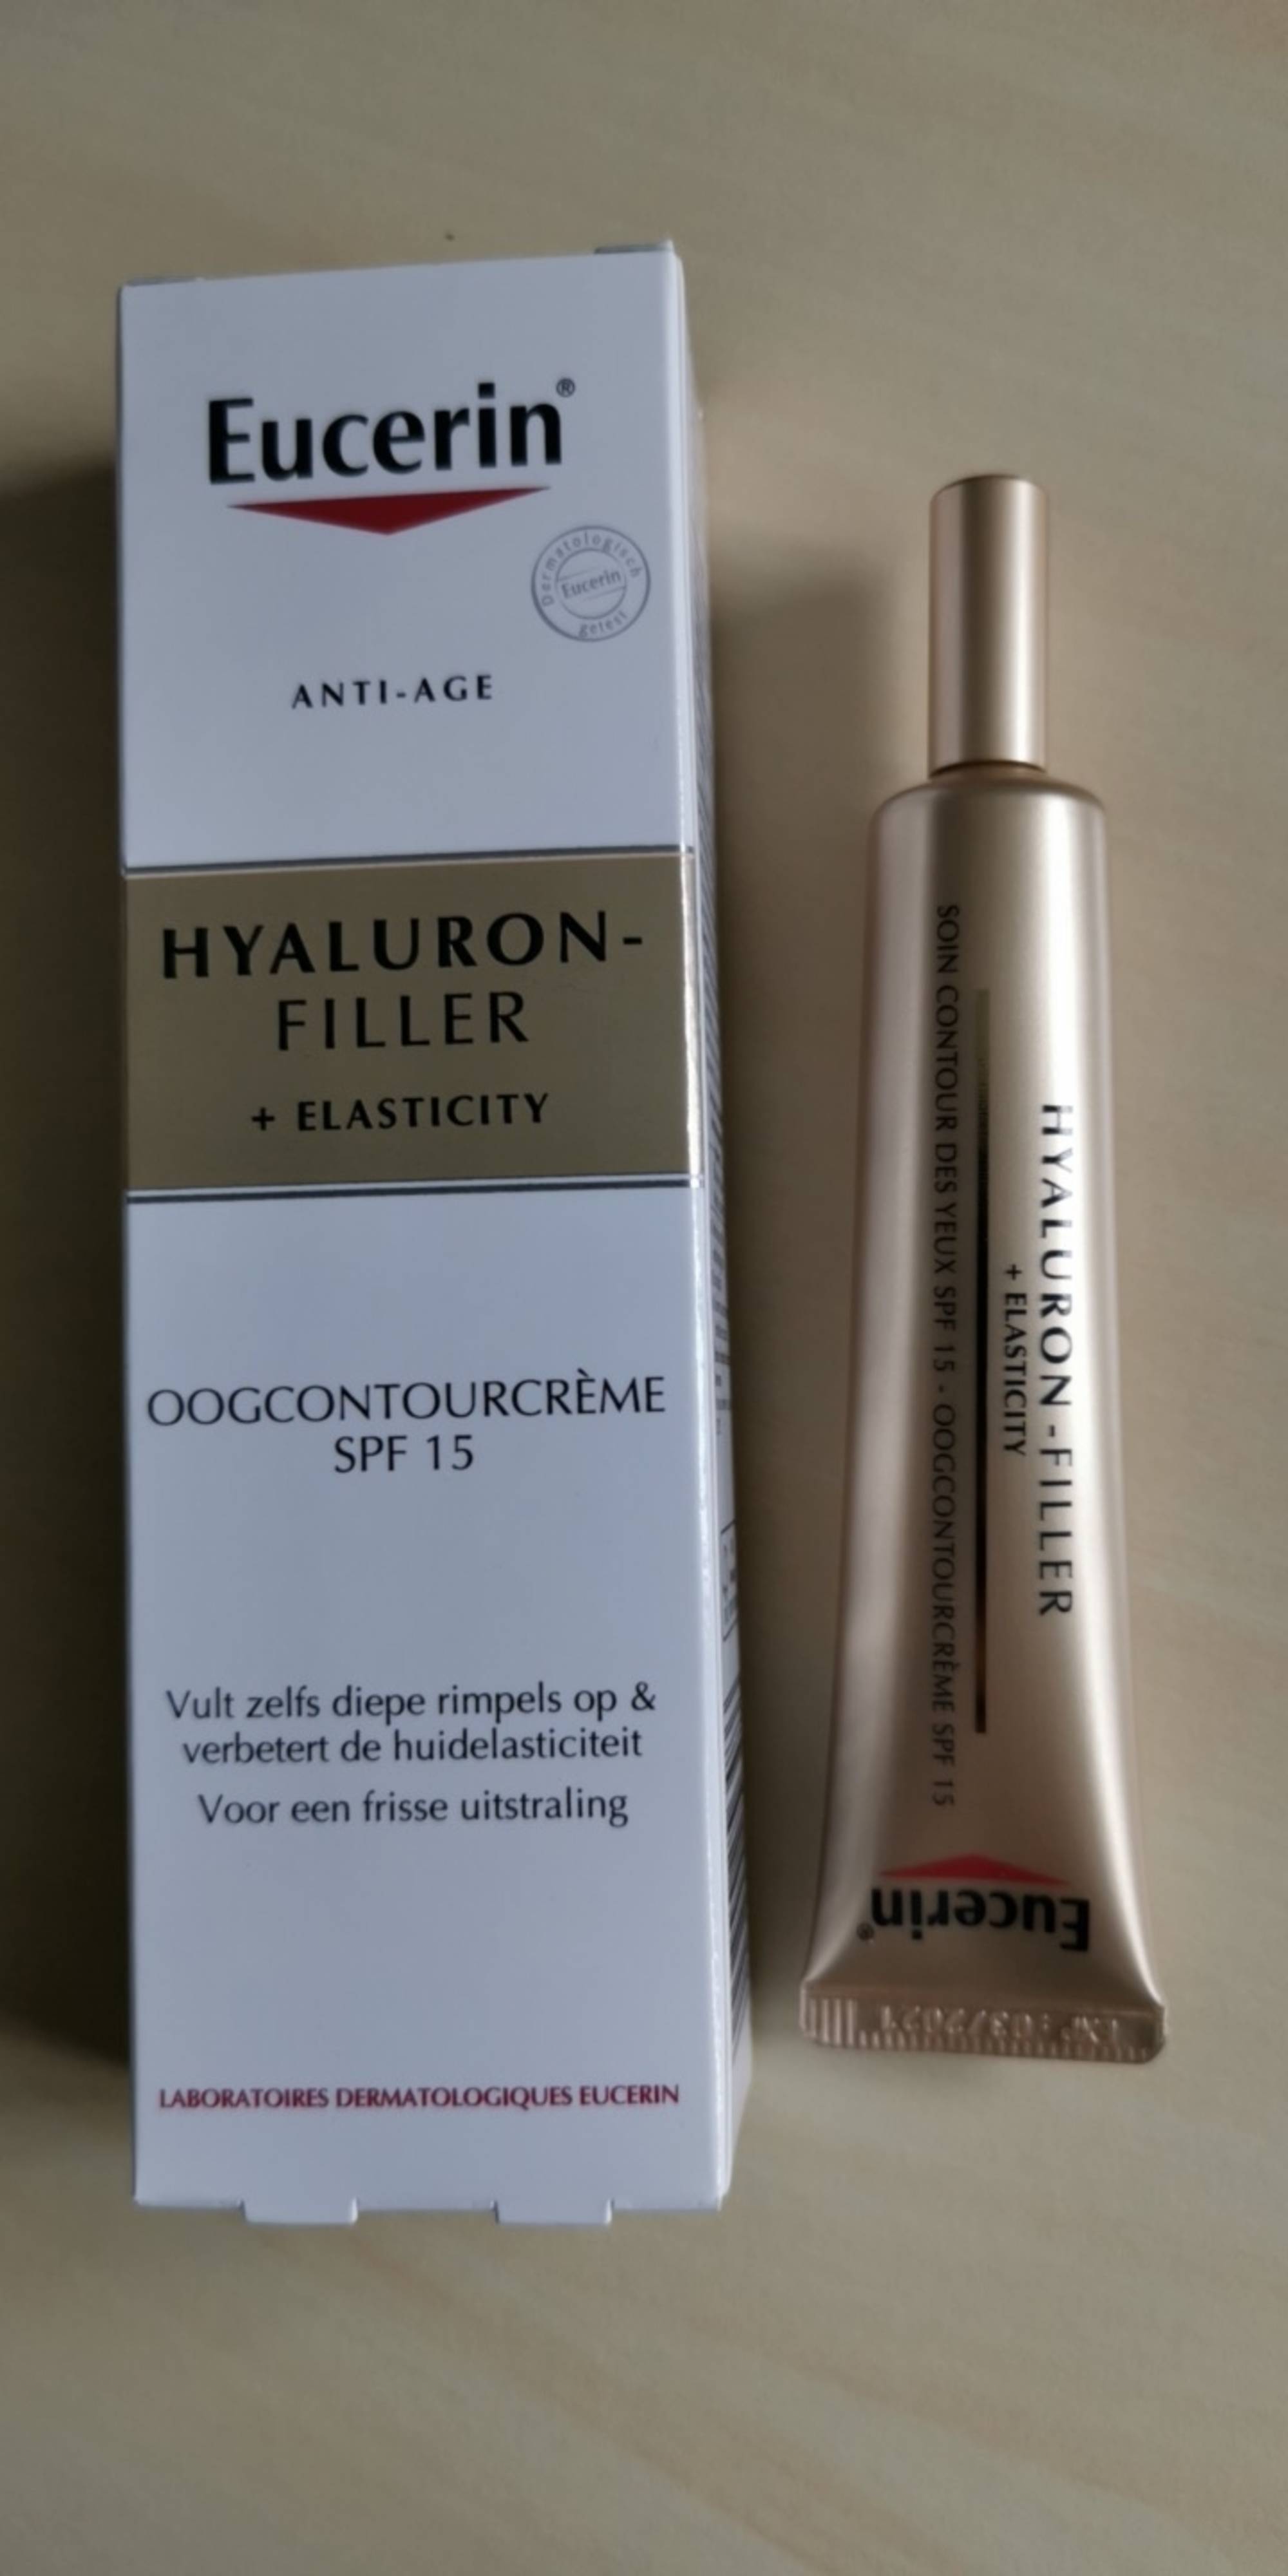 EUCERIN - Hyaluron filler + elasticity - OOG Contour crème SPF 15